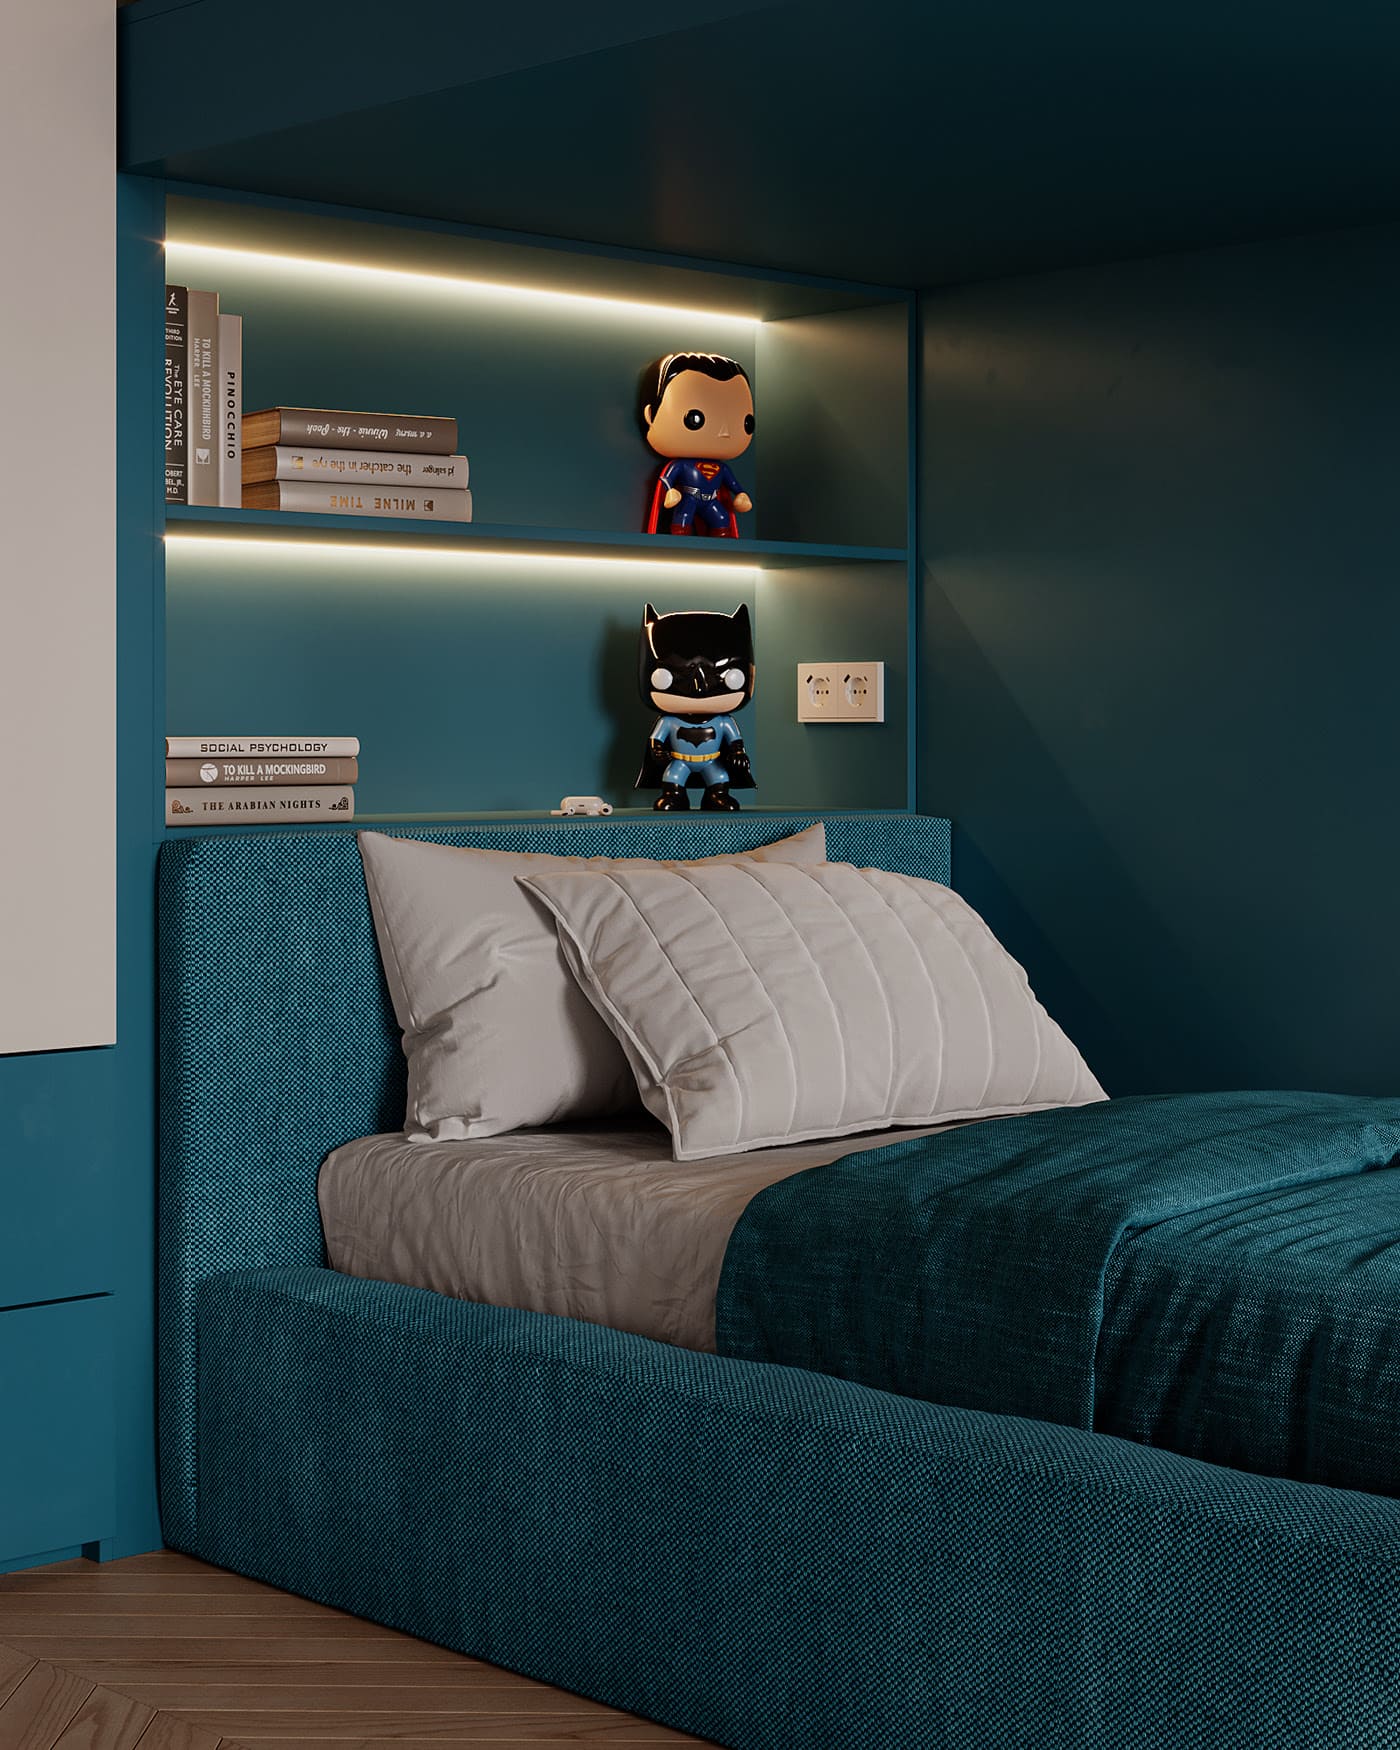 Prestigious bright apartment in minimalist style, child room, photo 15